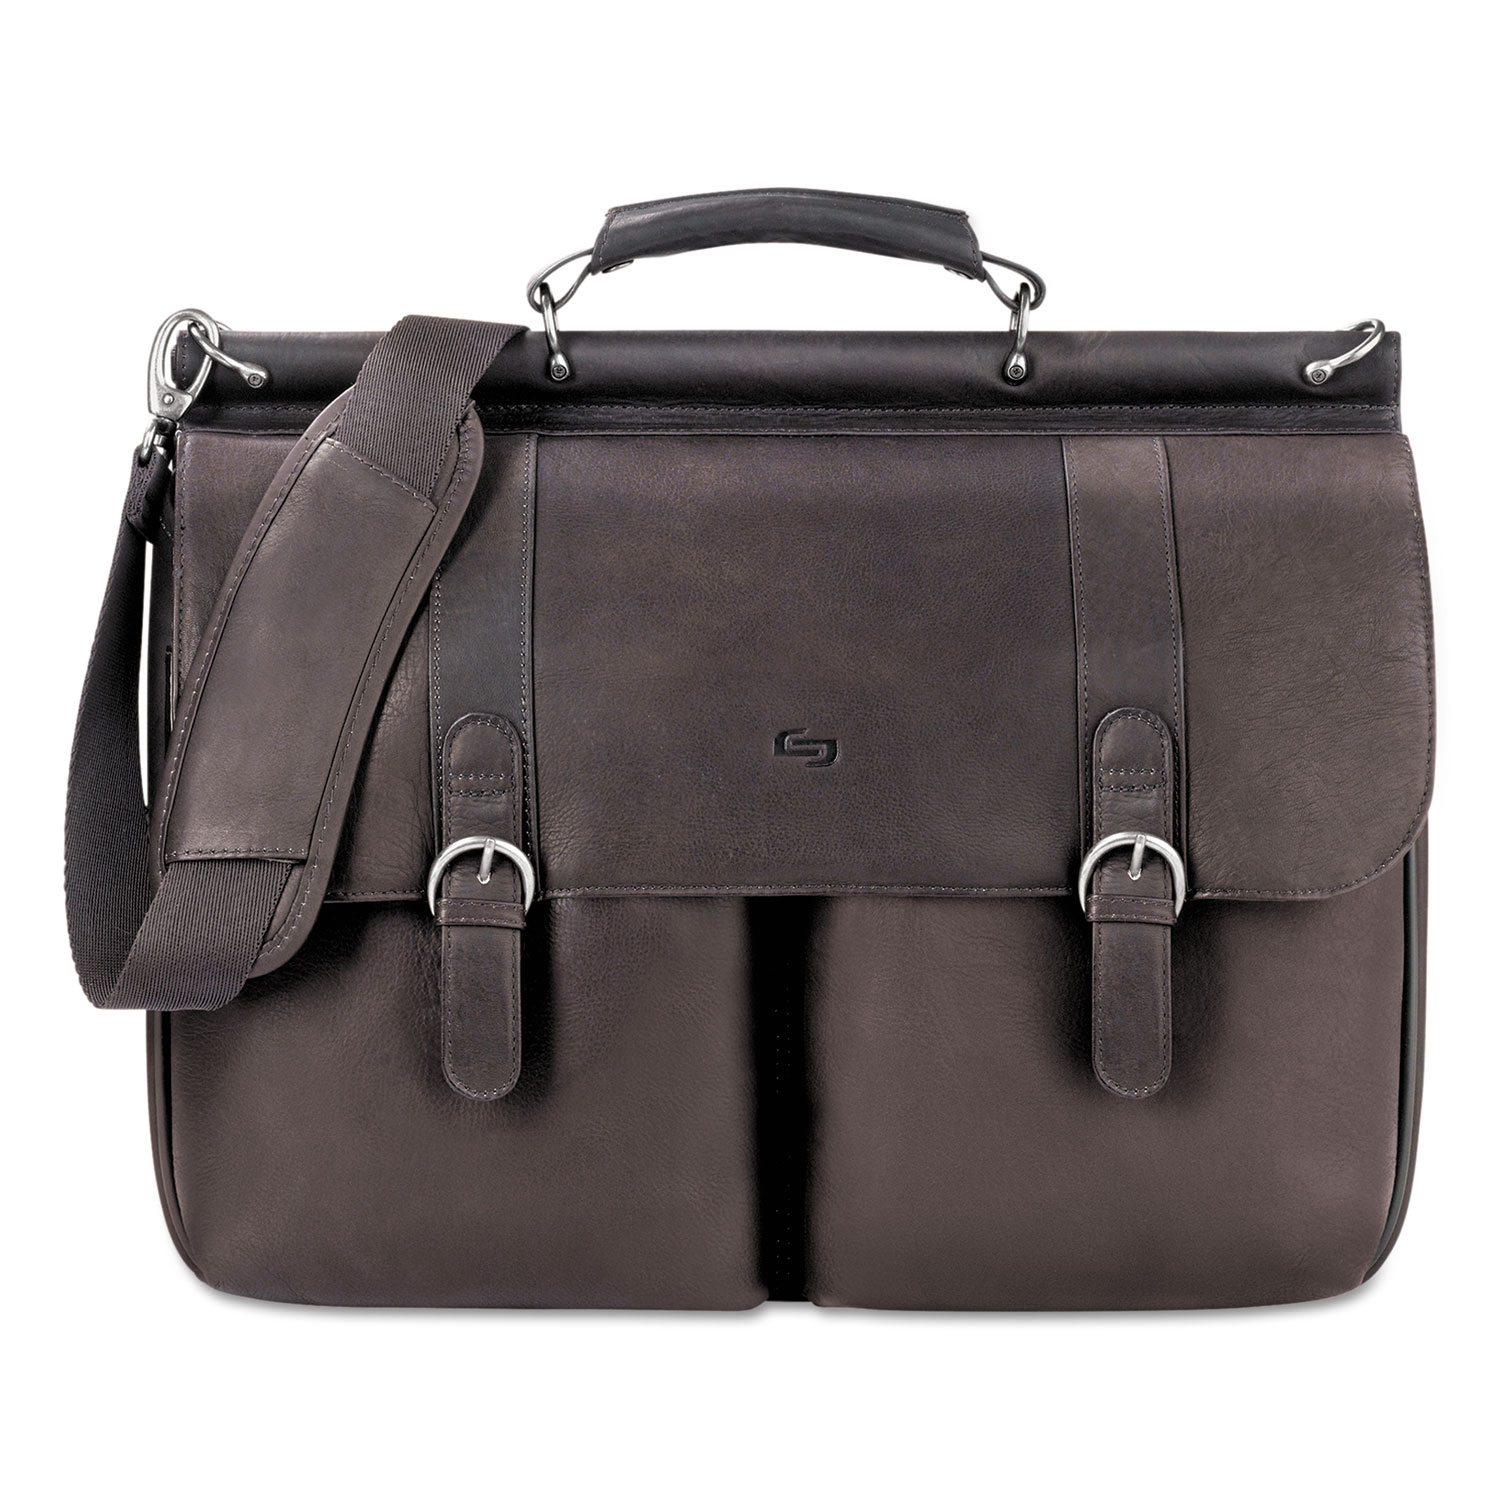  Solo D535-3 Executive Leather Briefcase, 16, 16 1/2 x 5 x 13, Espresso (USLD5353) 